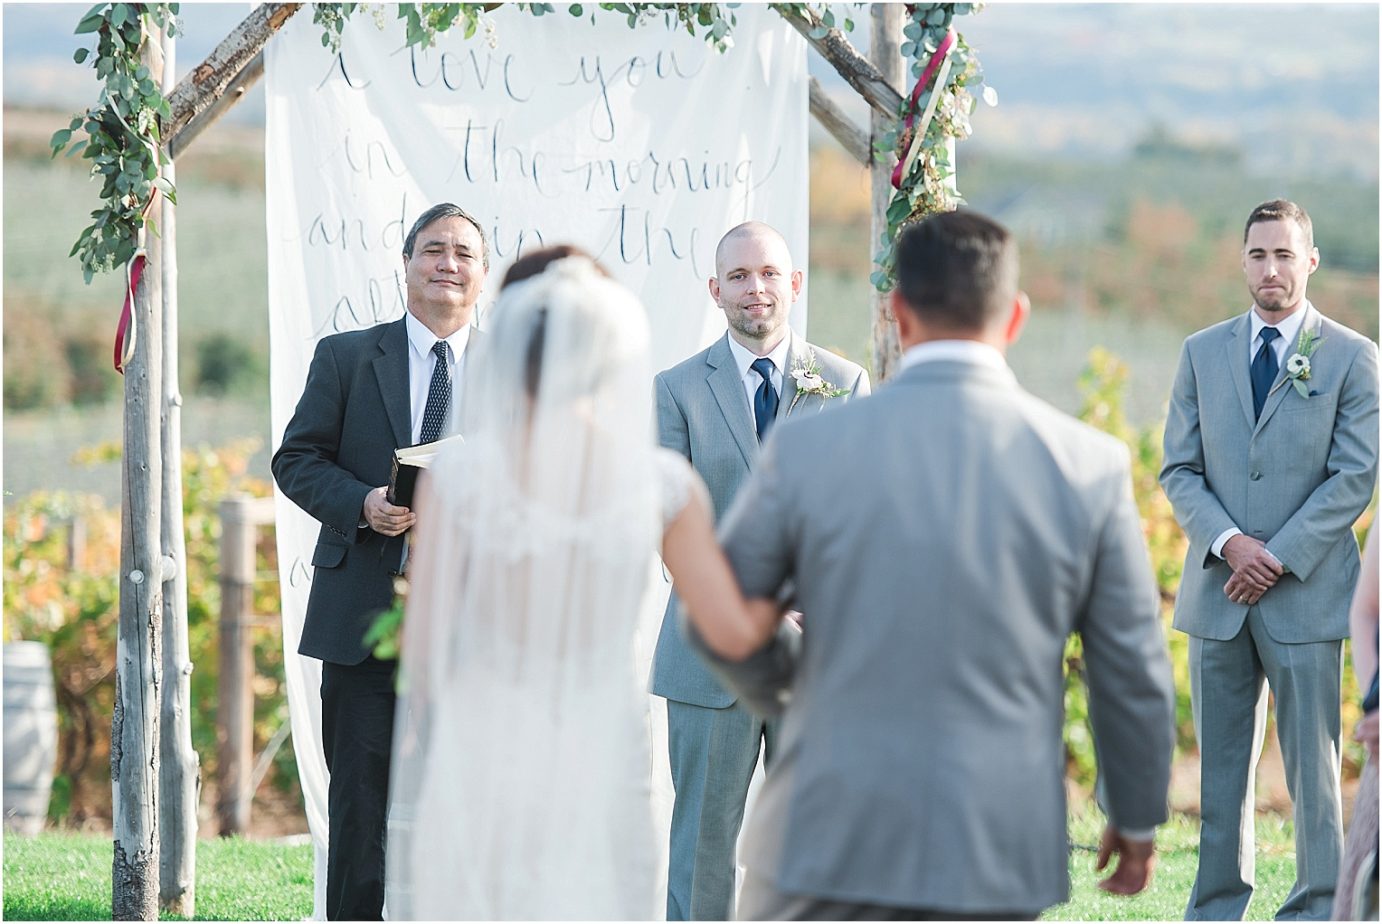 Fontaine Estates Winery Wedding Ceremony photo